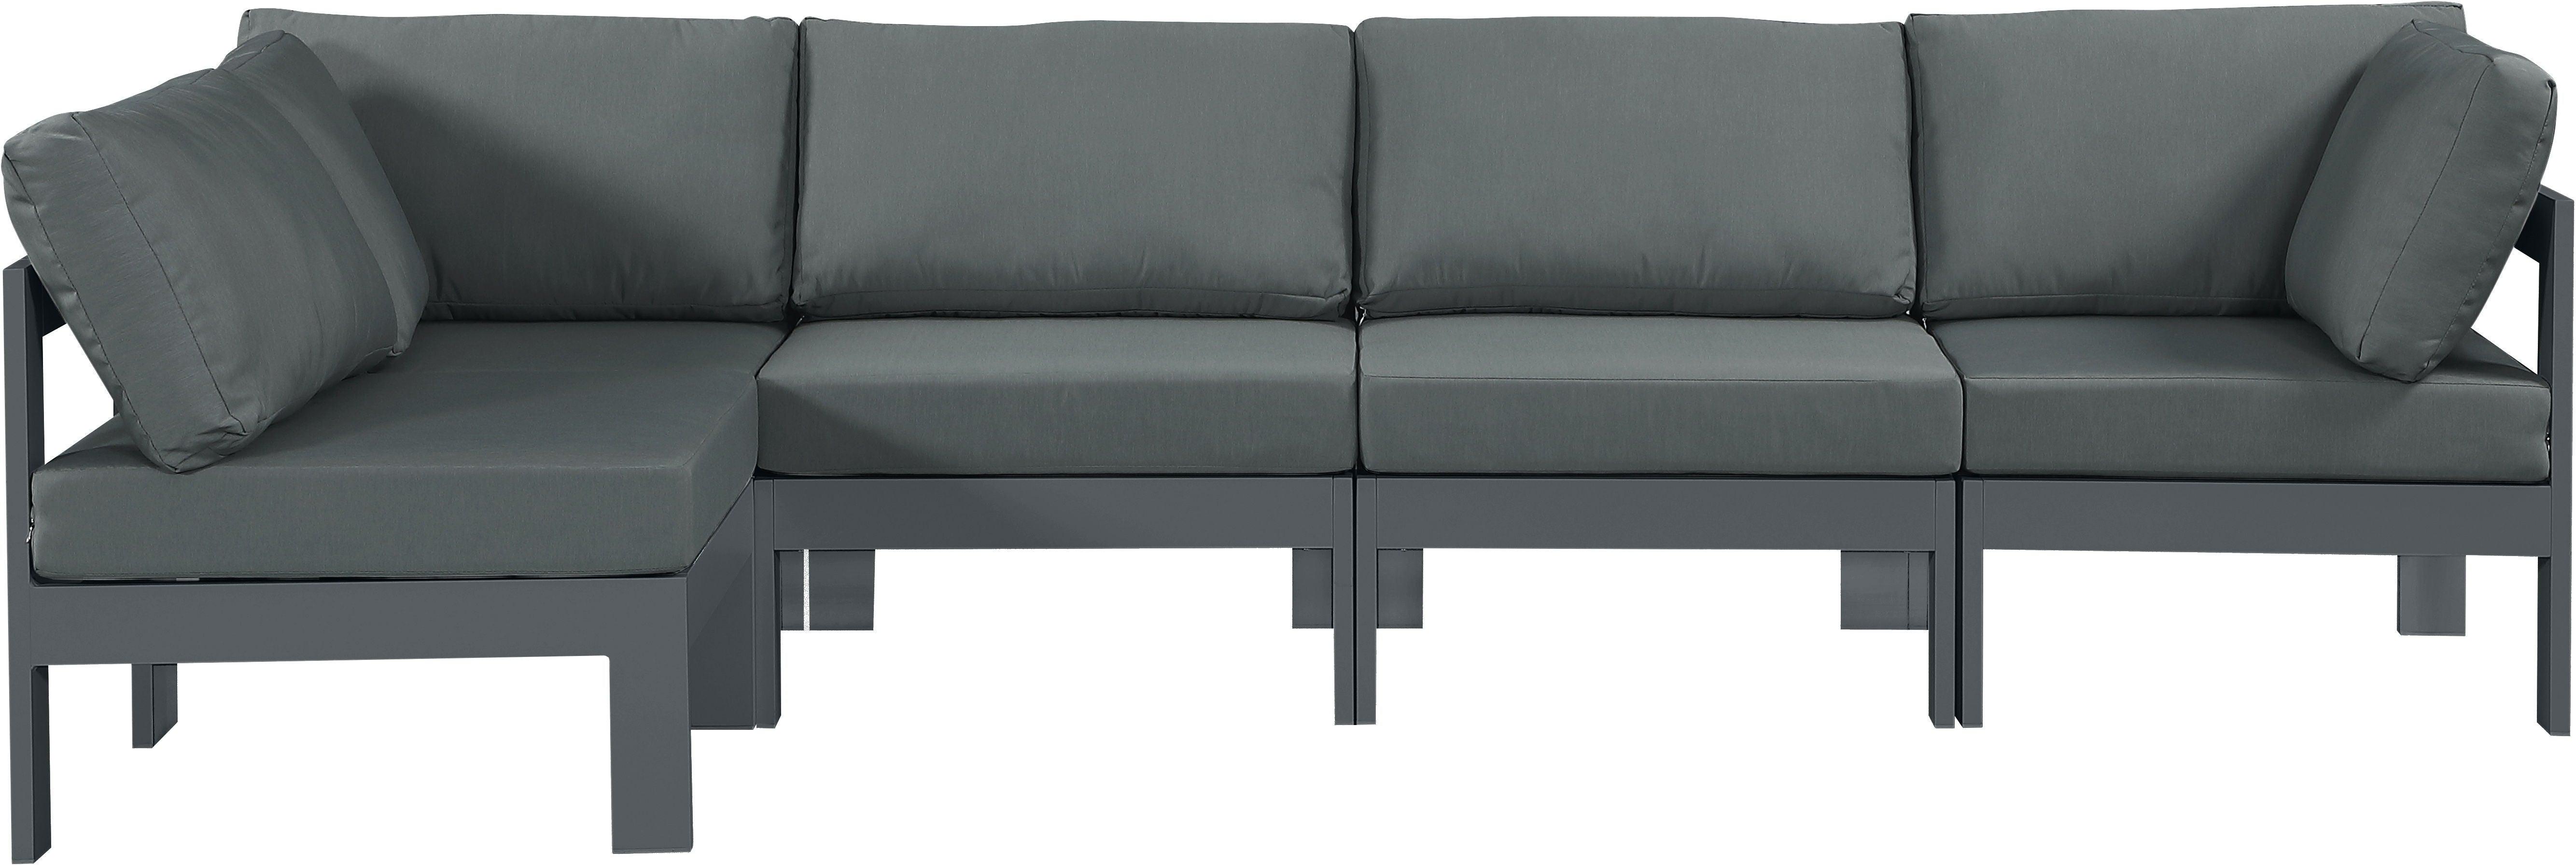 Meridian Furniture - Nizuc - Outdoor Patio Modular Sectional 5 Piece - Grey - Fabric - Modern & Contemporary - 5th Avenue Furniture